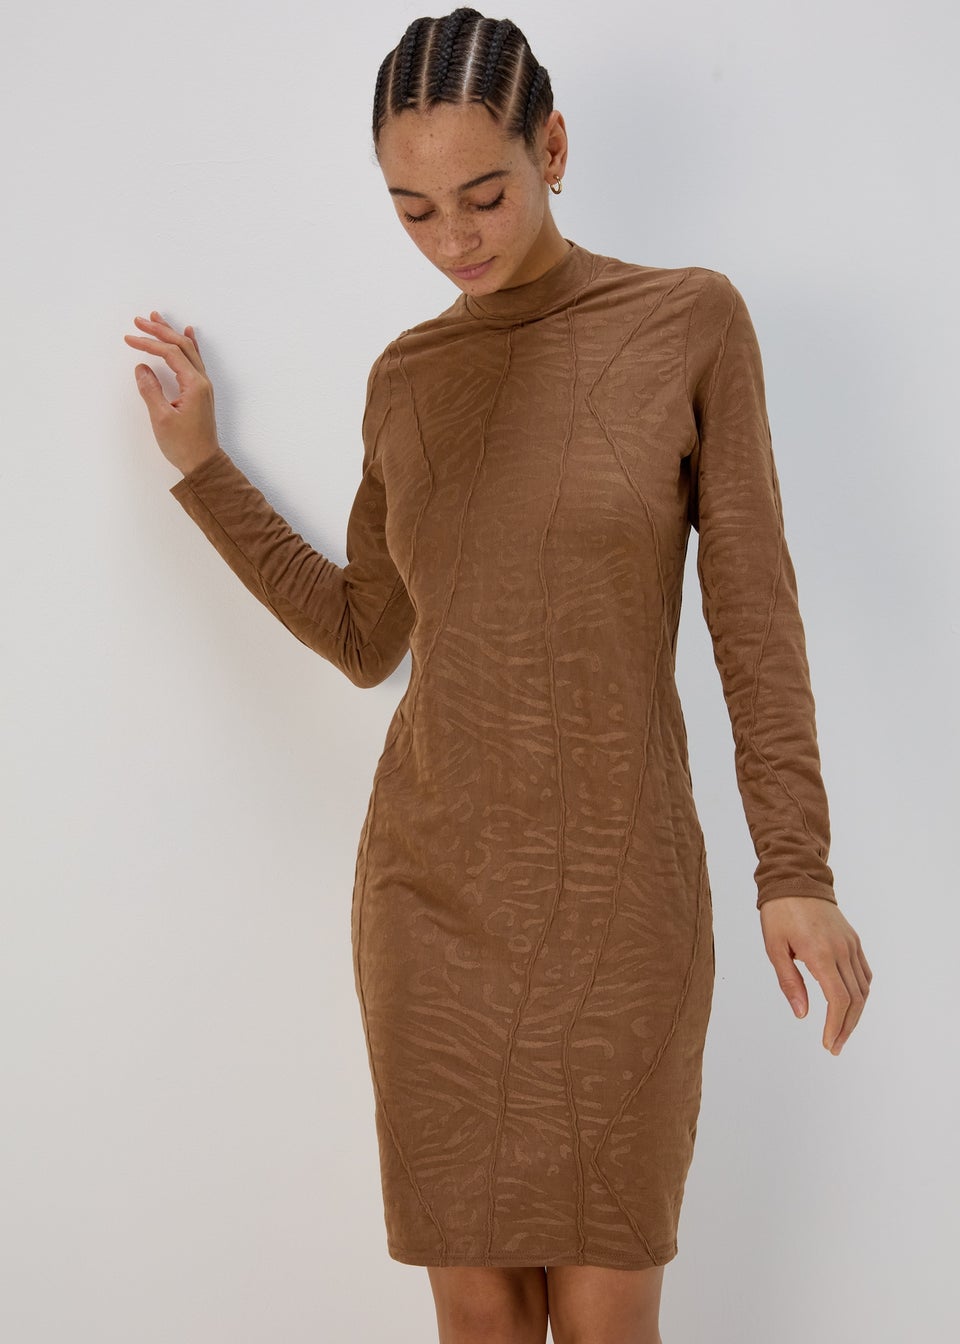 Brown Animal Print Jacquard Dress